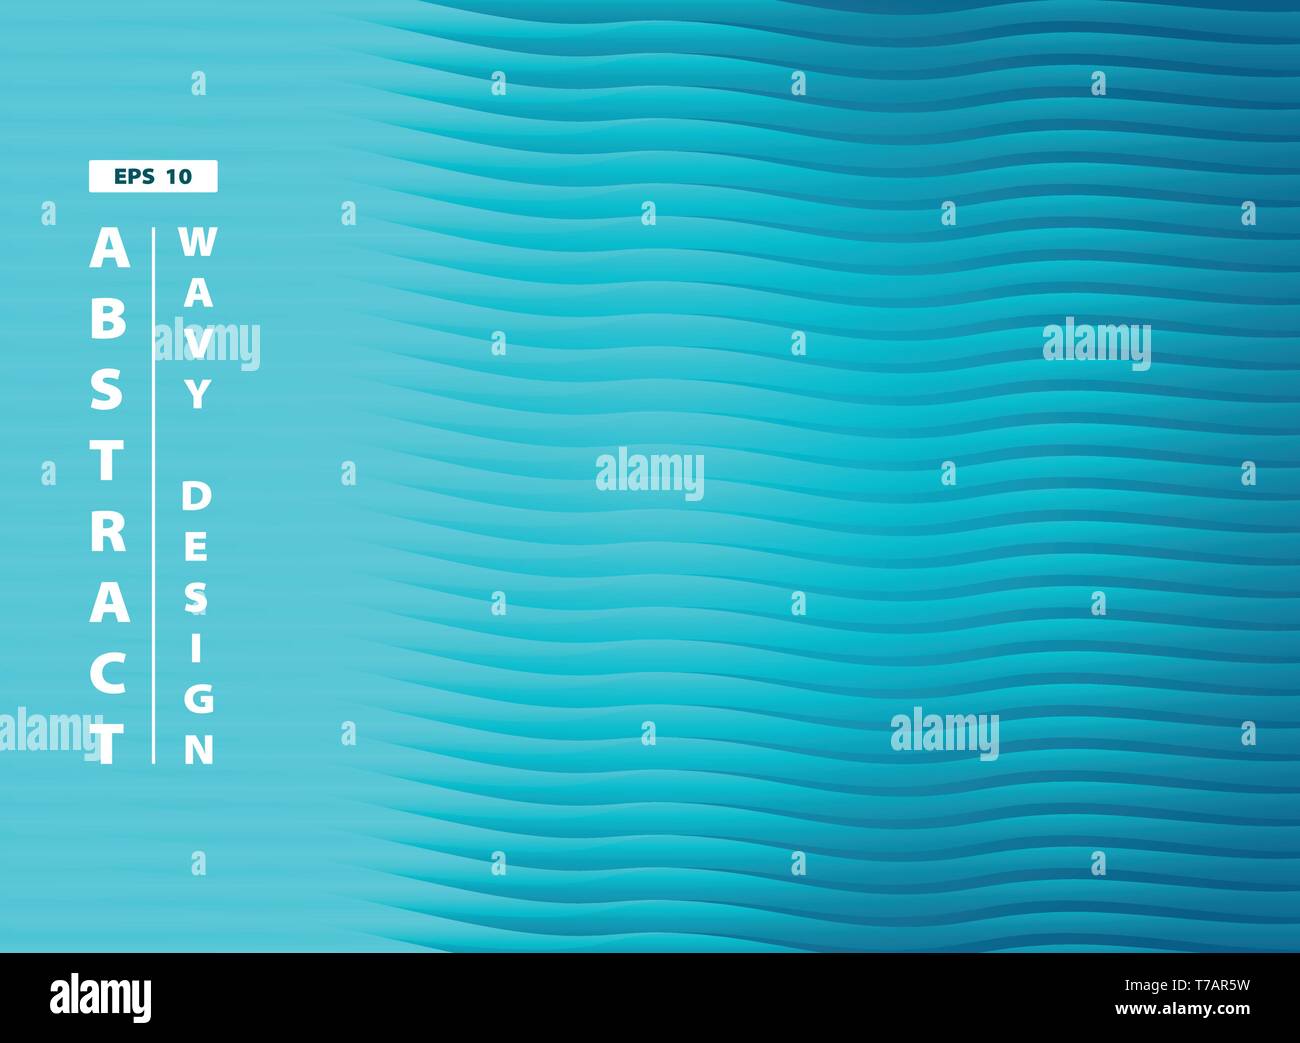 Abstrakt Blau aqua Meer wellenförmige Muster Design Hintergrund. Sie können die Cover Design, ad, Poster, Illustrationen, Print, Präsentation verwenden. illustration Vektor Stock Vektor